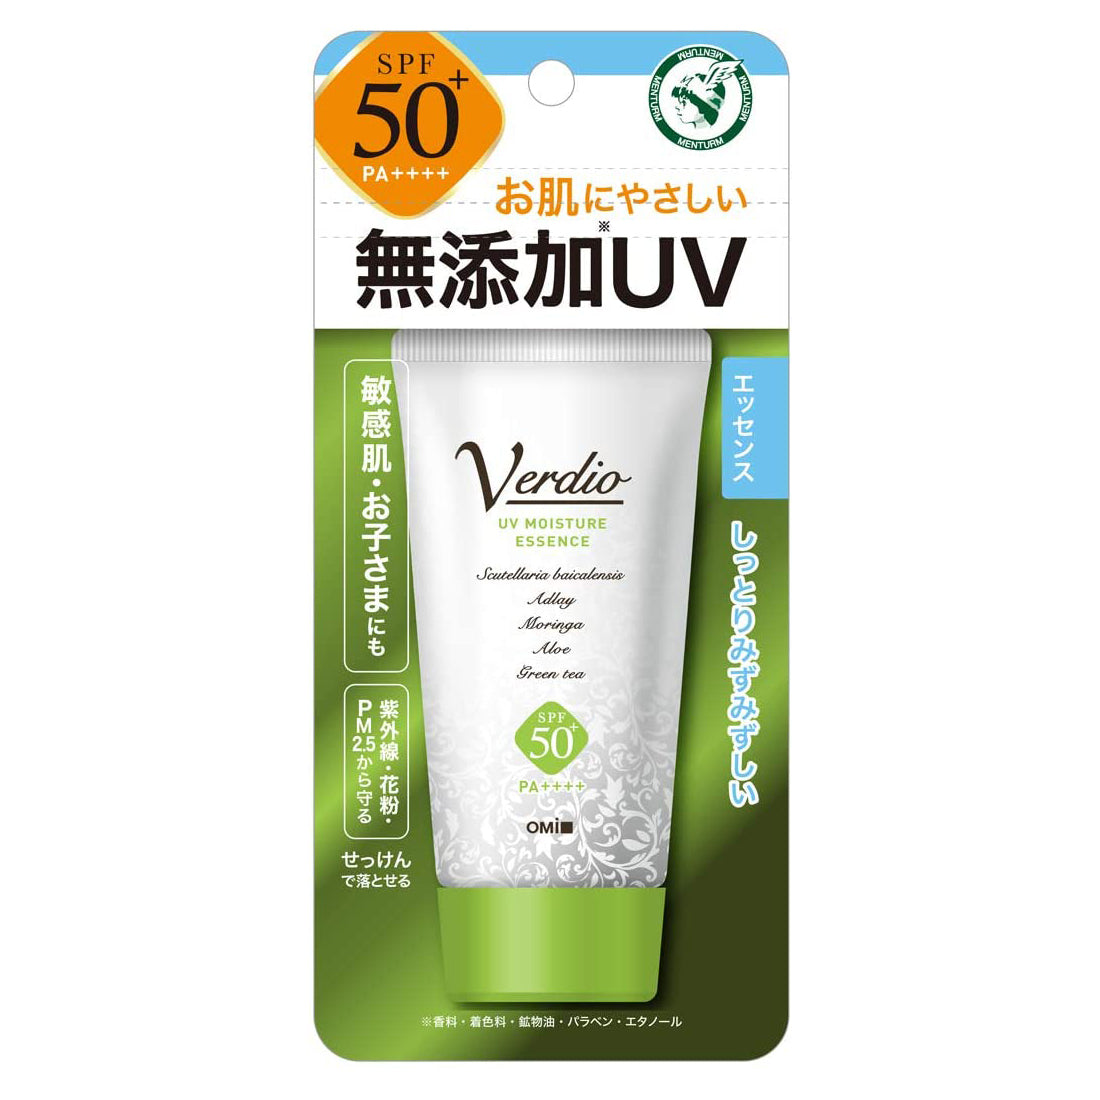 Verdio UV Moisture Essence SPF 50+ PA++++ Beauty Omi   